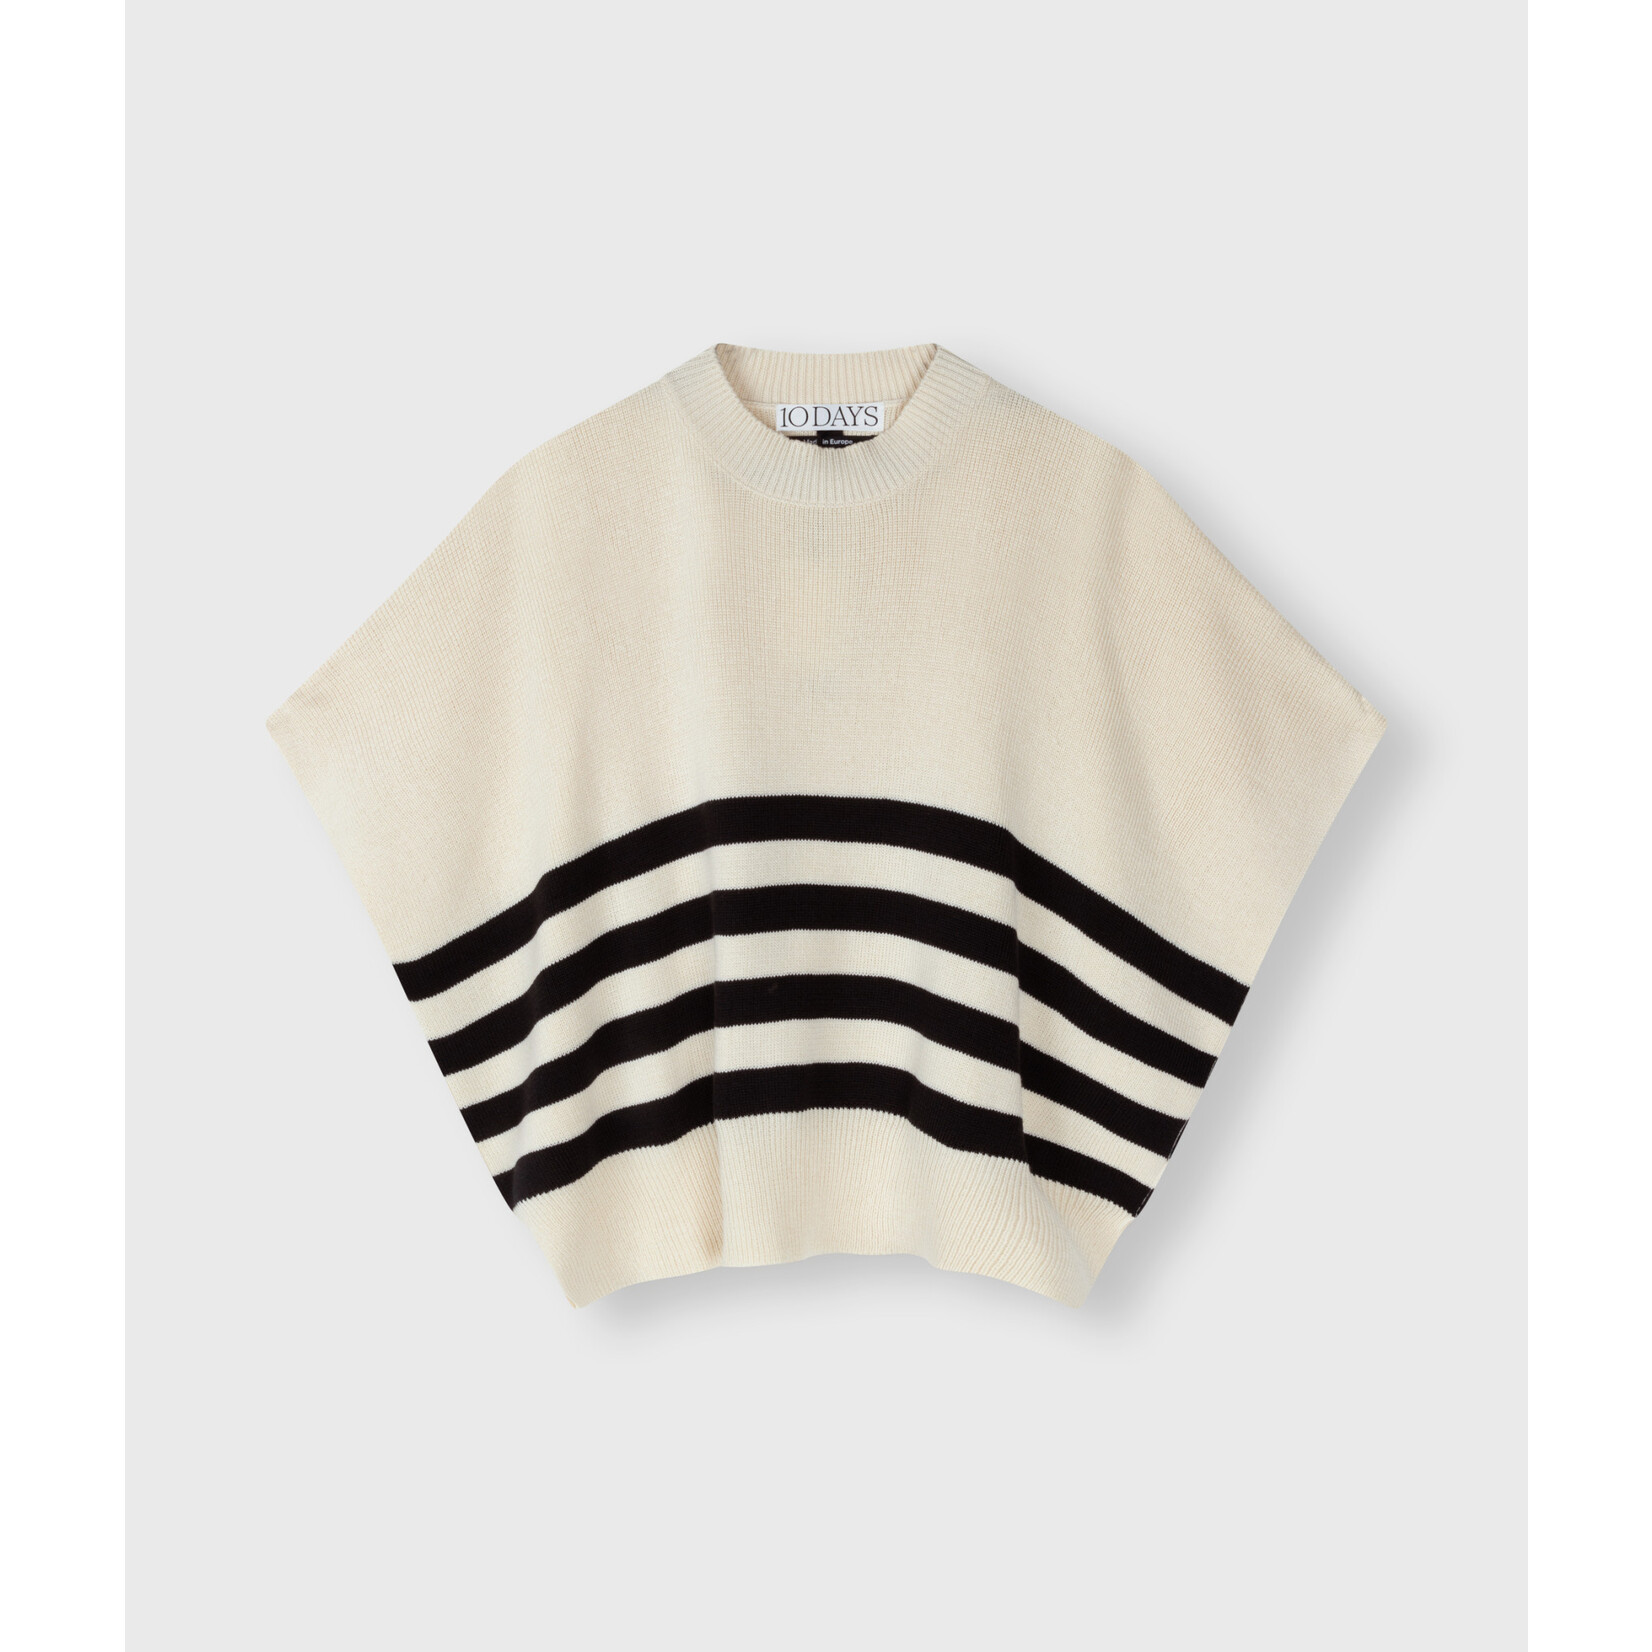 10Days Sleeveless sweater knit stripes Light safari